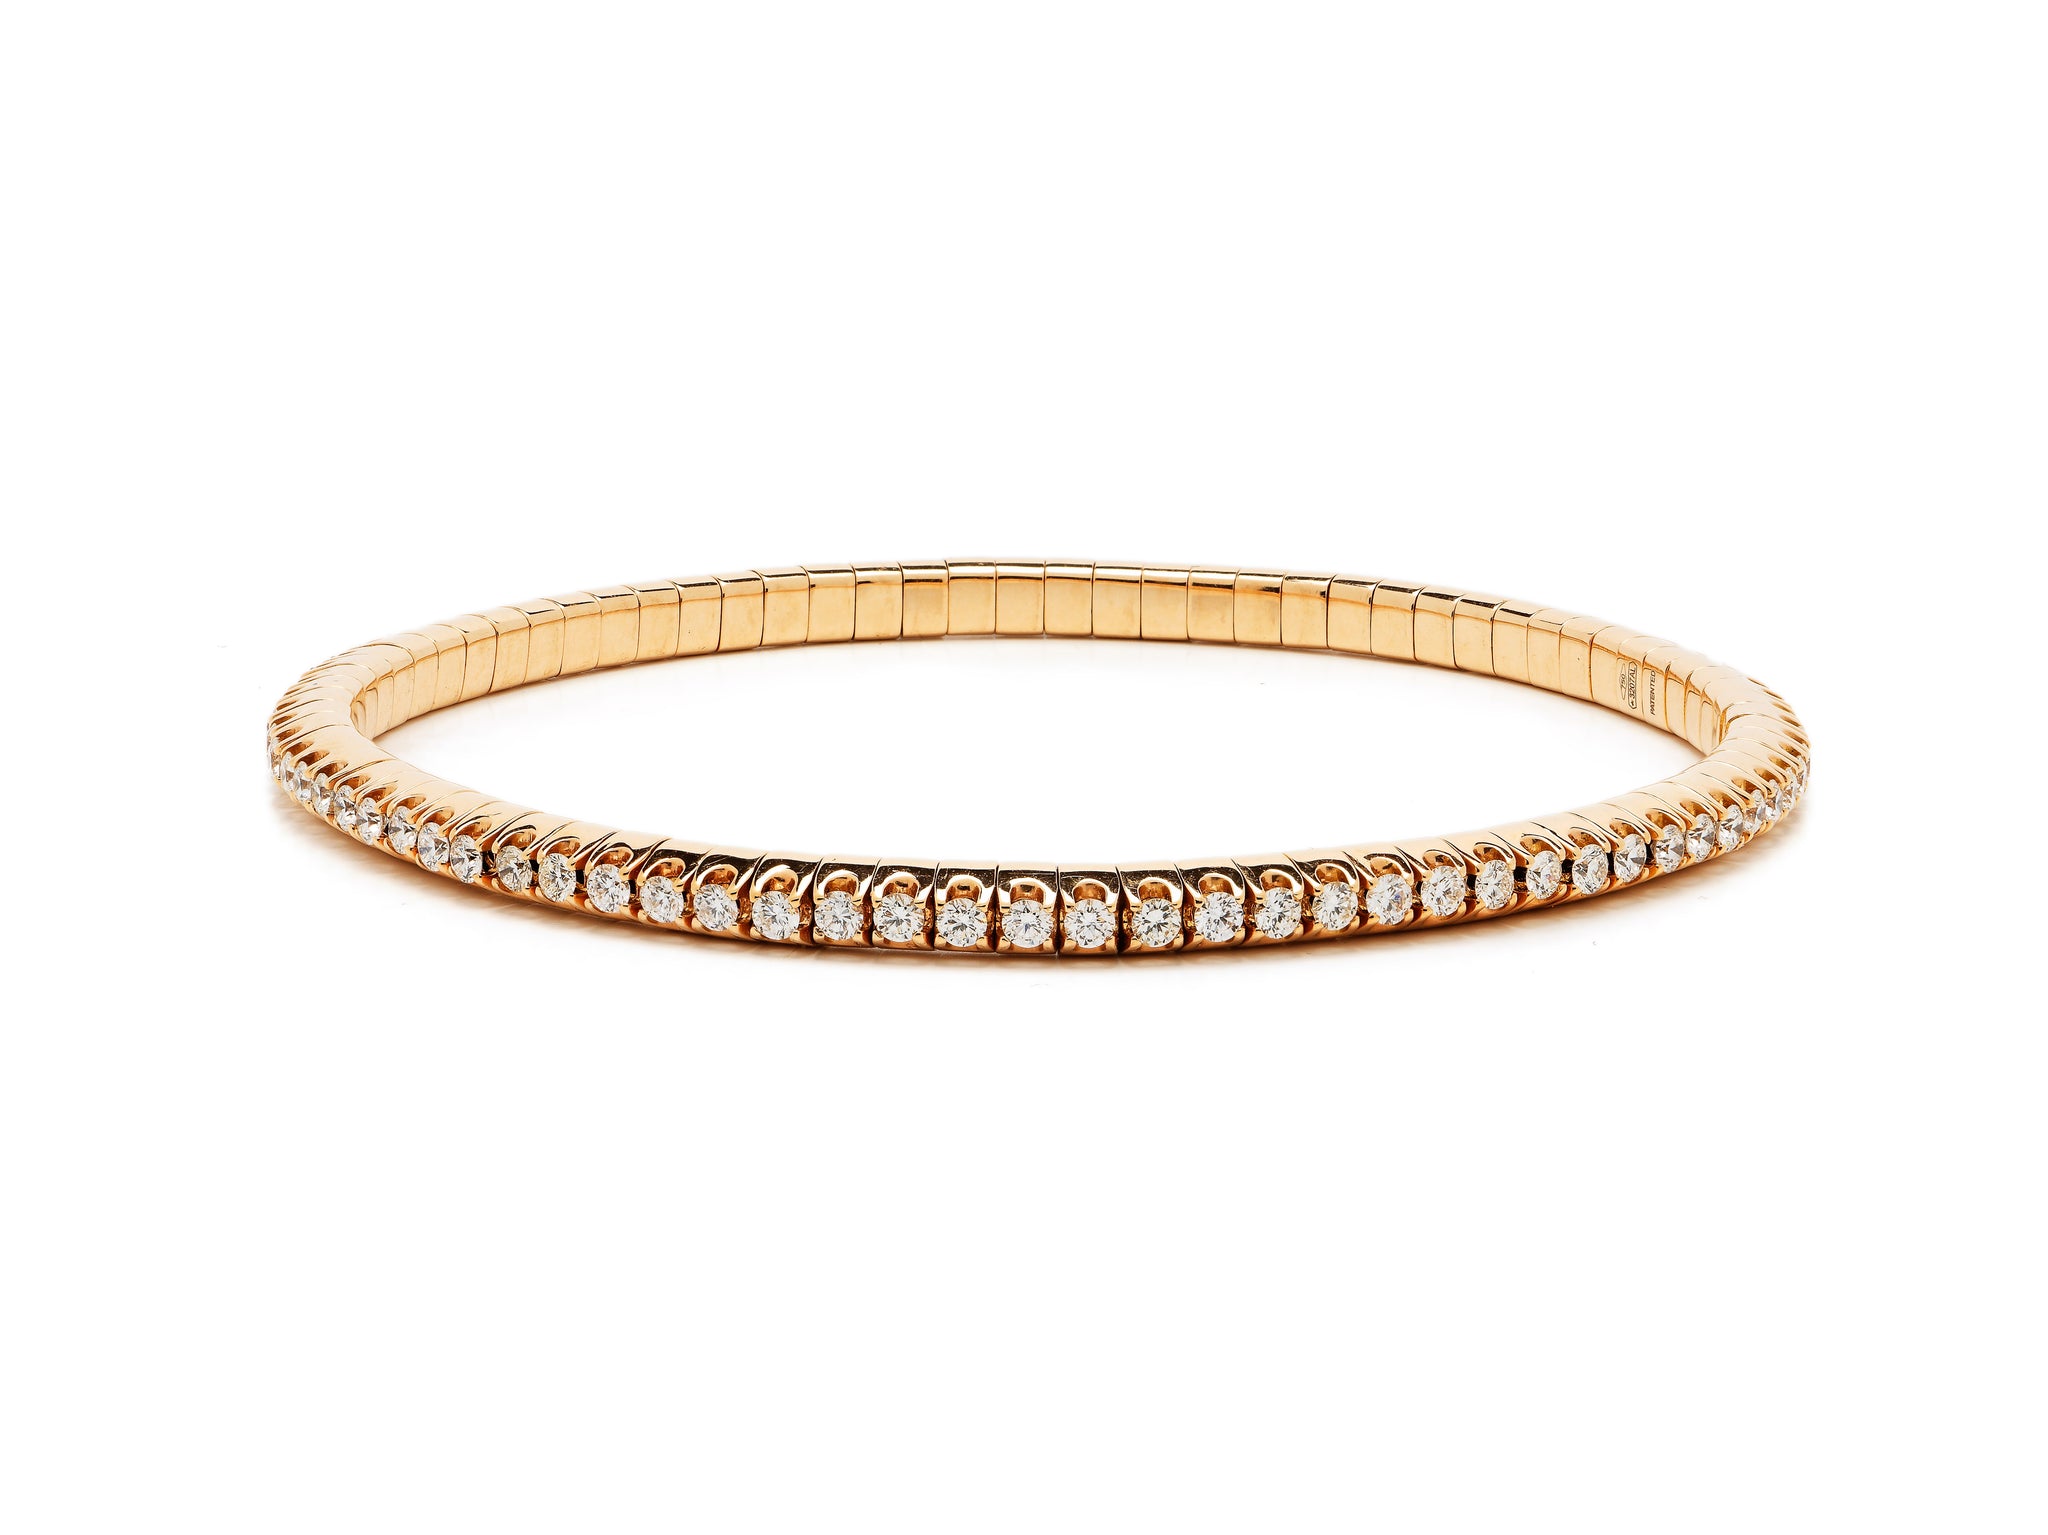 18 krt yellow gold flexible tennis bracelet set with 81 brilliant diamonds